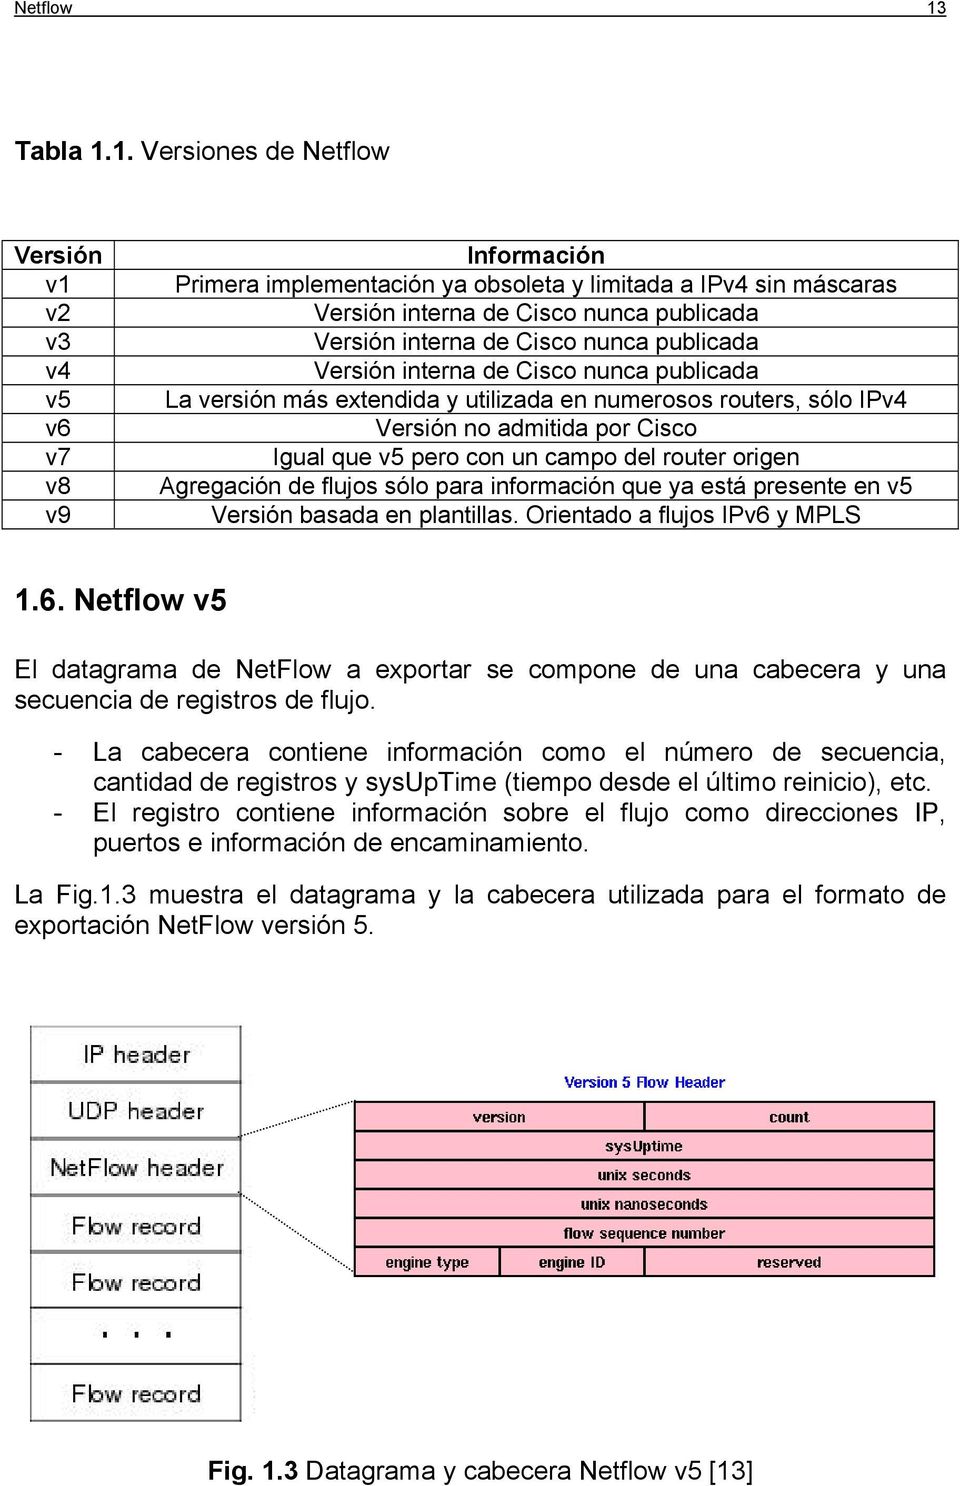 1. Versiones de Netflow Versión v1 v2 v3 v4 v5 v6 v7 v8 v9 Información Primera implementación ya obsoleta y limitada a IPv4 sin máscaras Versión interna de Cisco nunca publicada Versión interna de